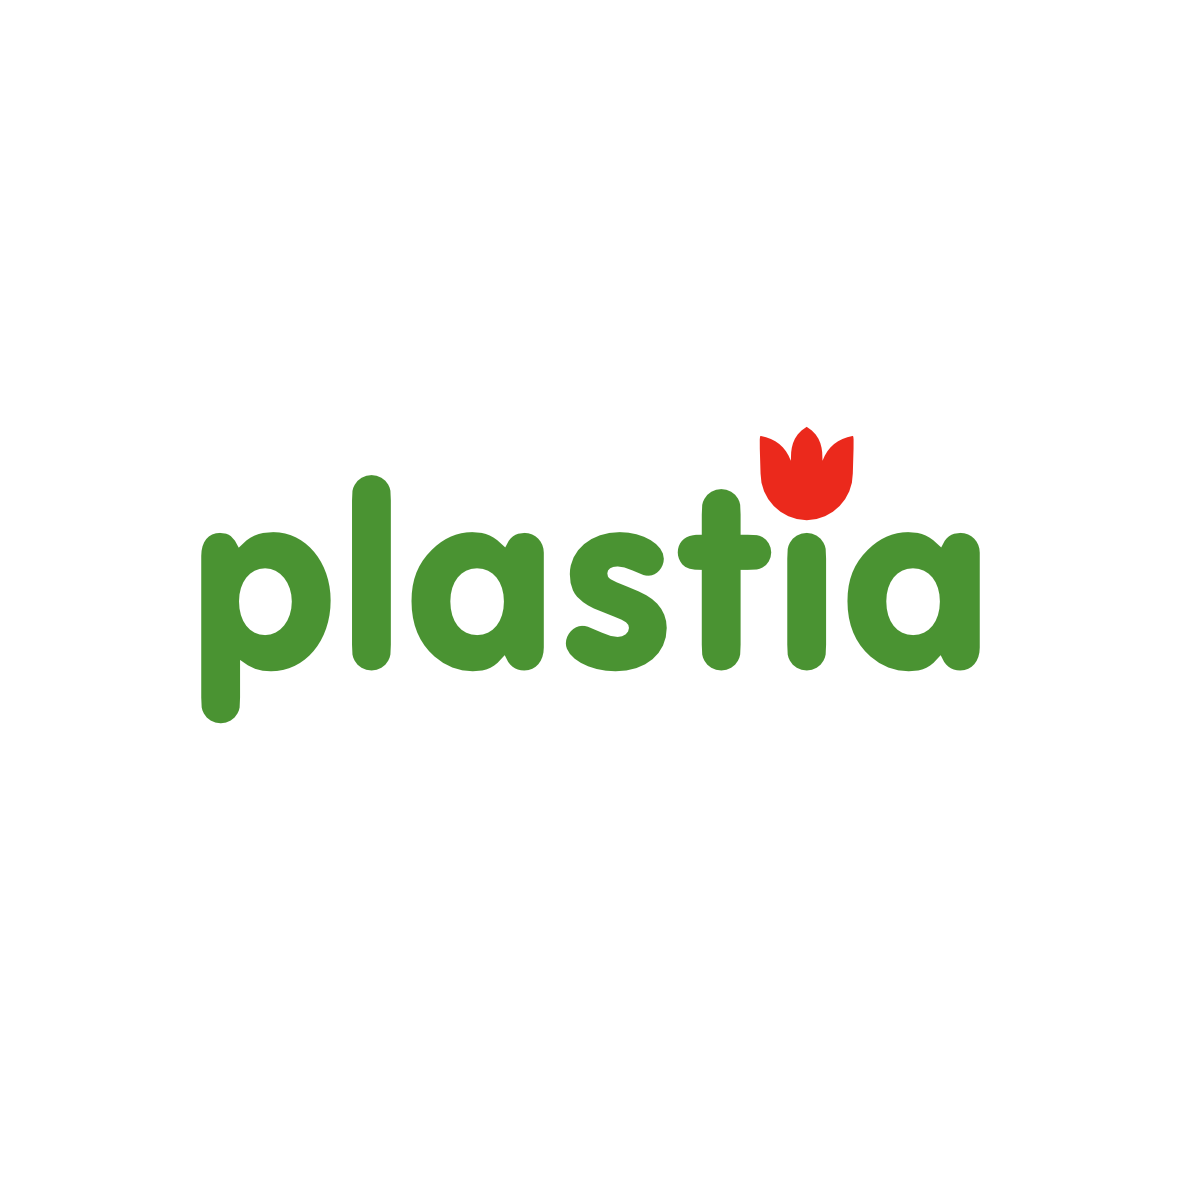 Plastia logo